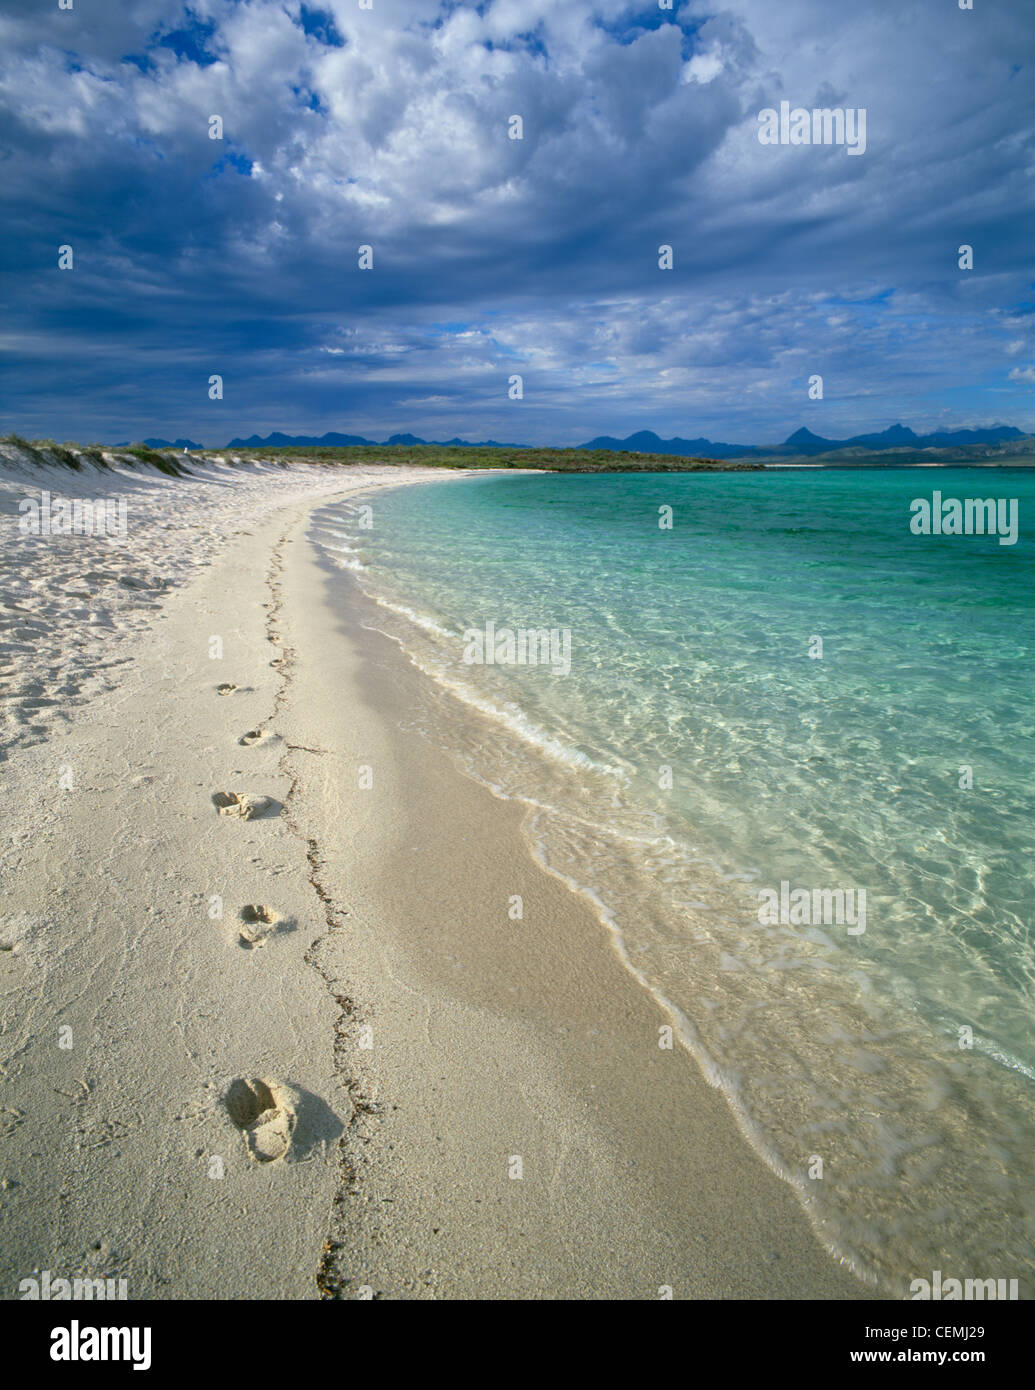 The beach on Isla Coronado, Baja California Sur, Mexico Stock Photo